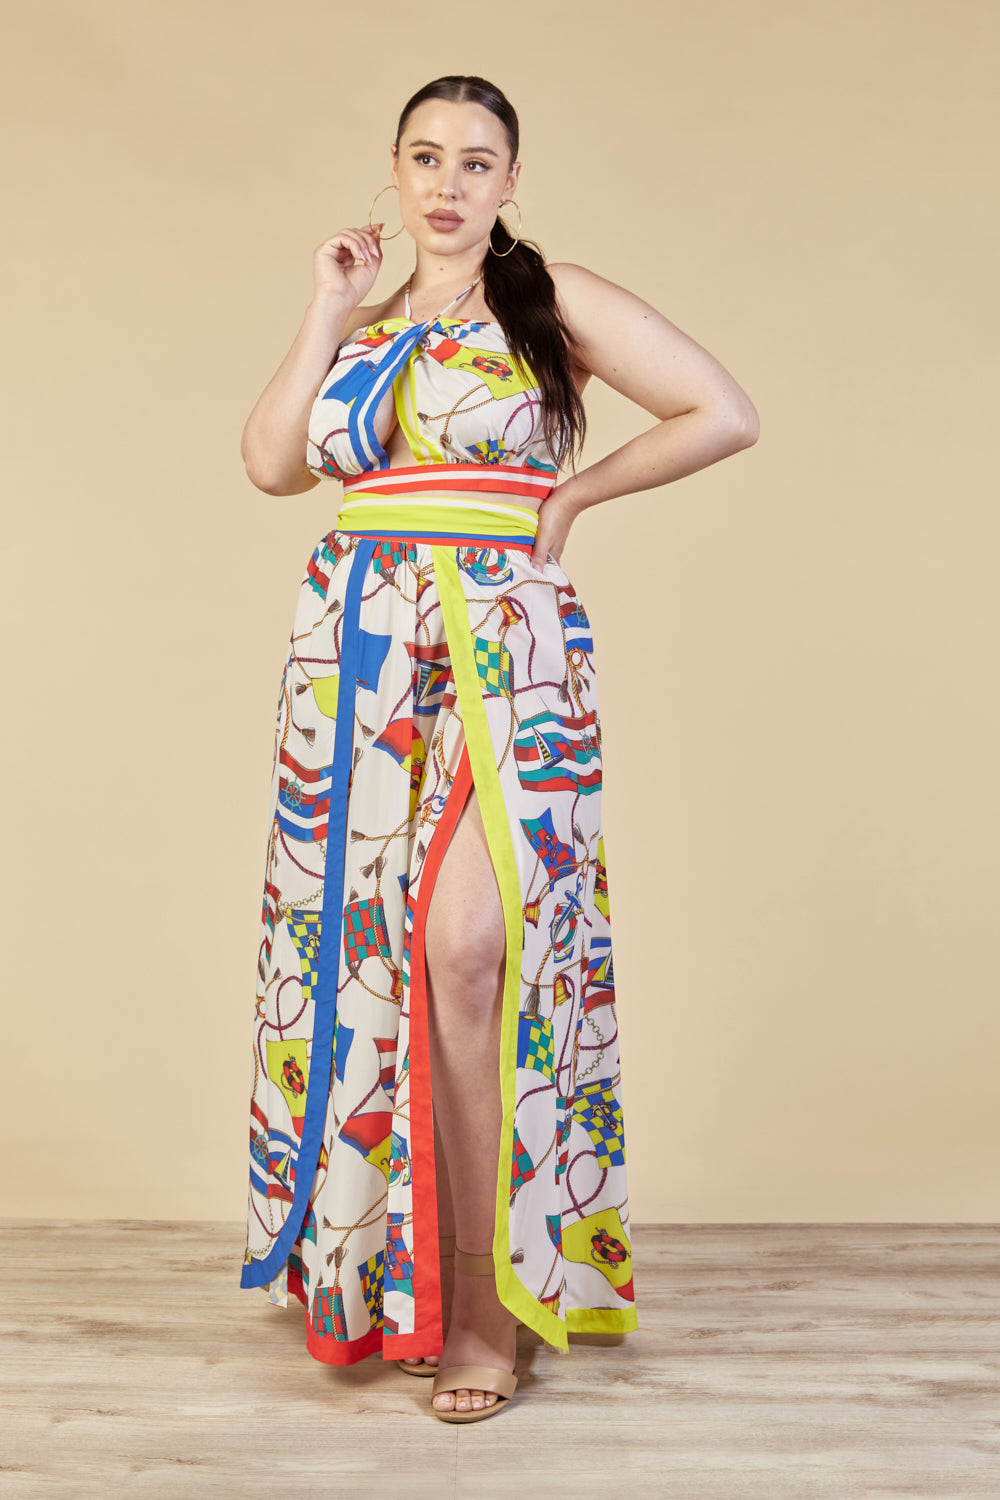 Eva White Fringe Cutout Two-Piece Skirt Set - DOLCE & DIVA